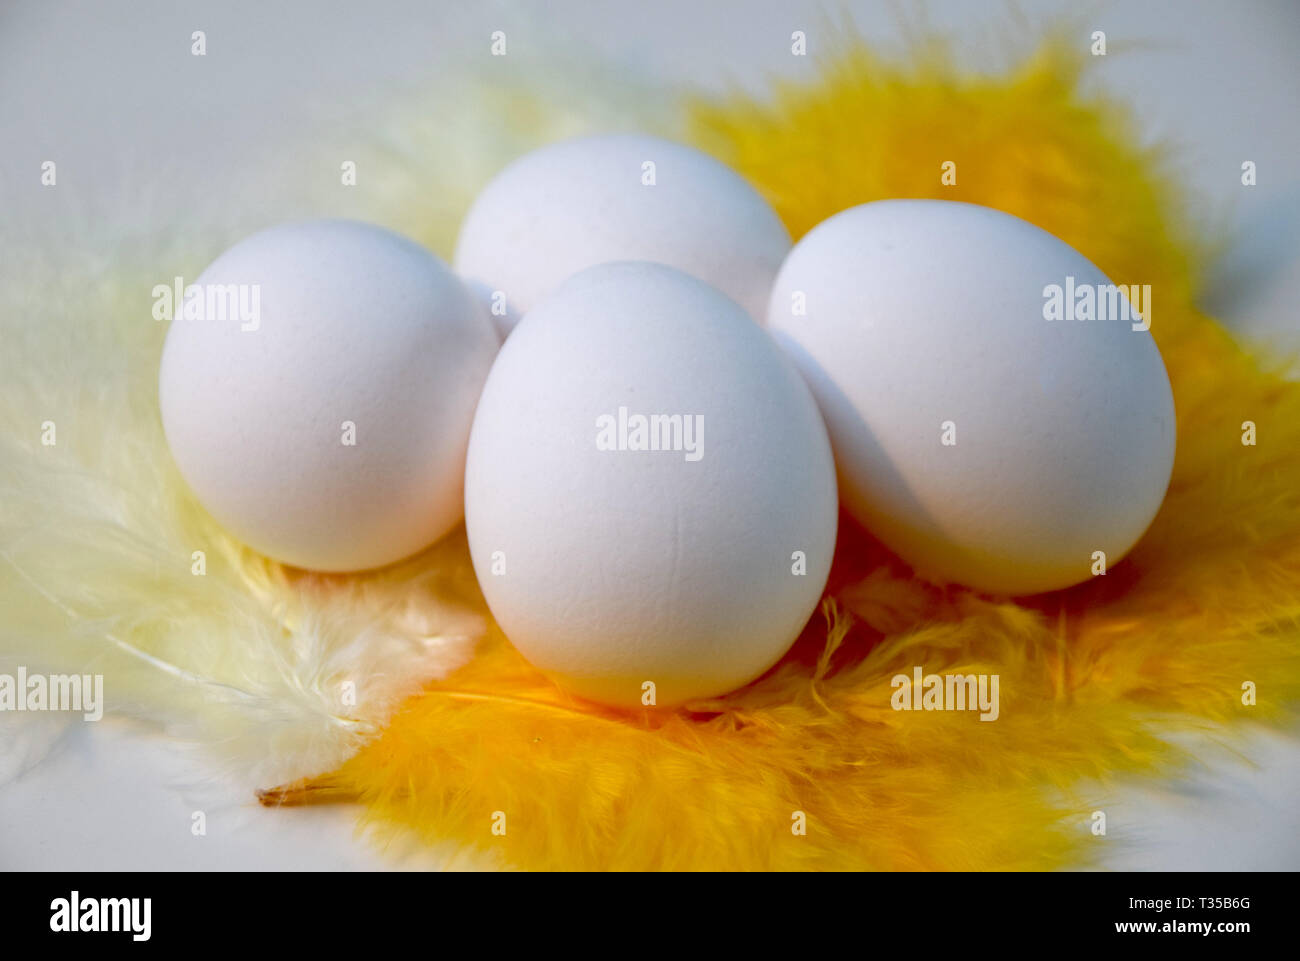 Four white eggs on yellow and white feathers Stock Photo